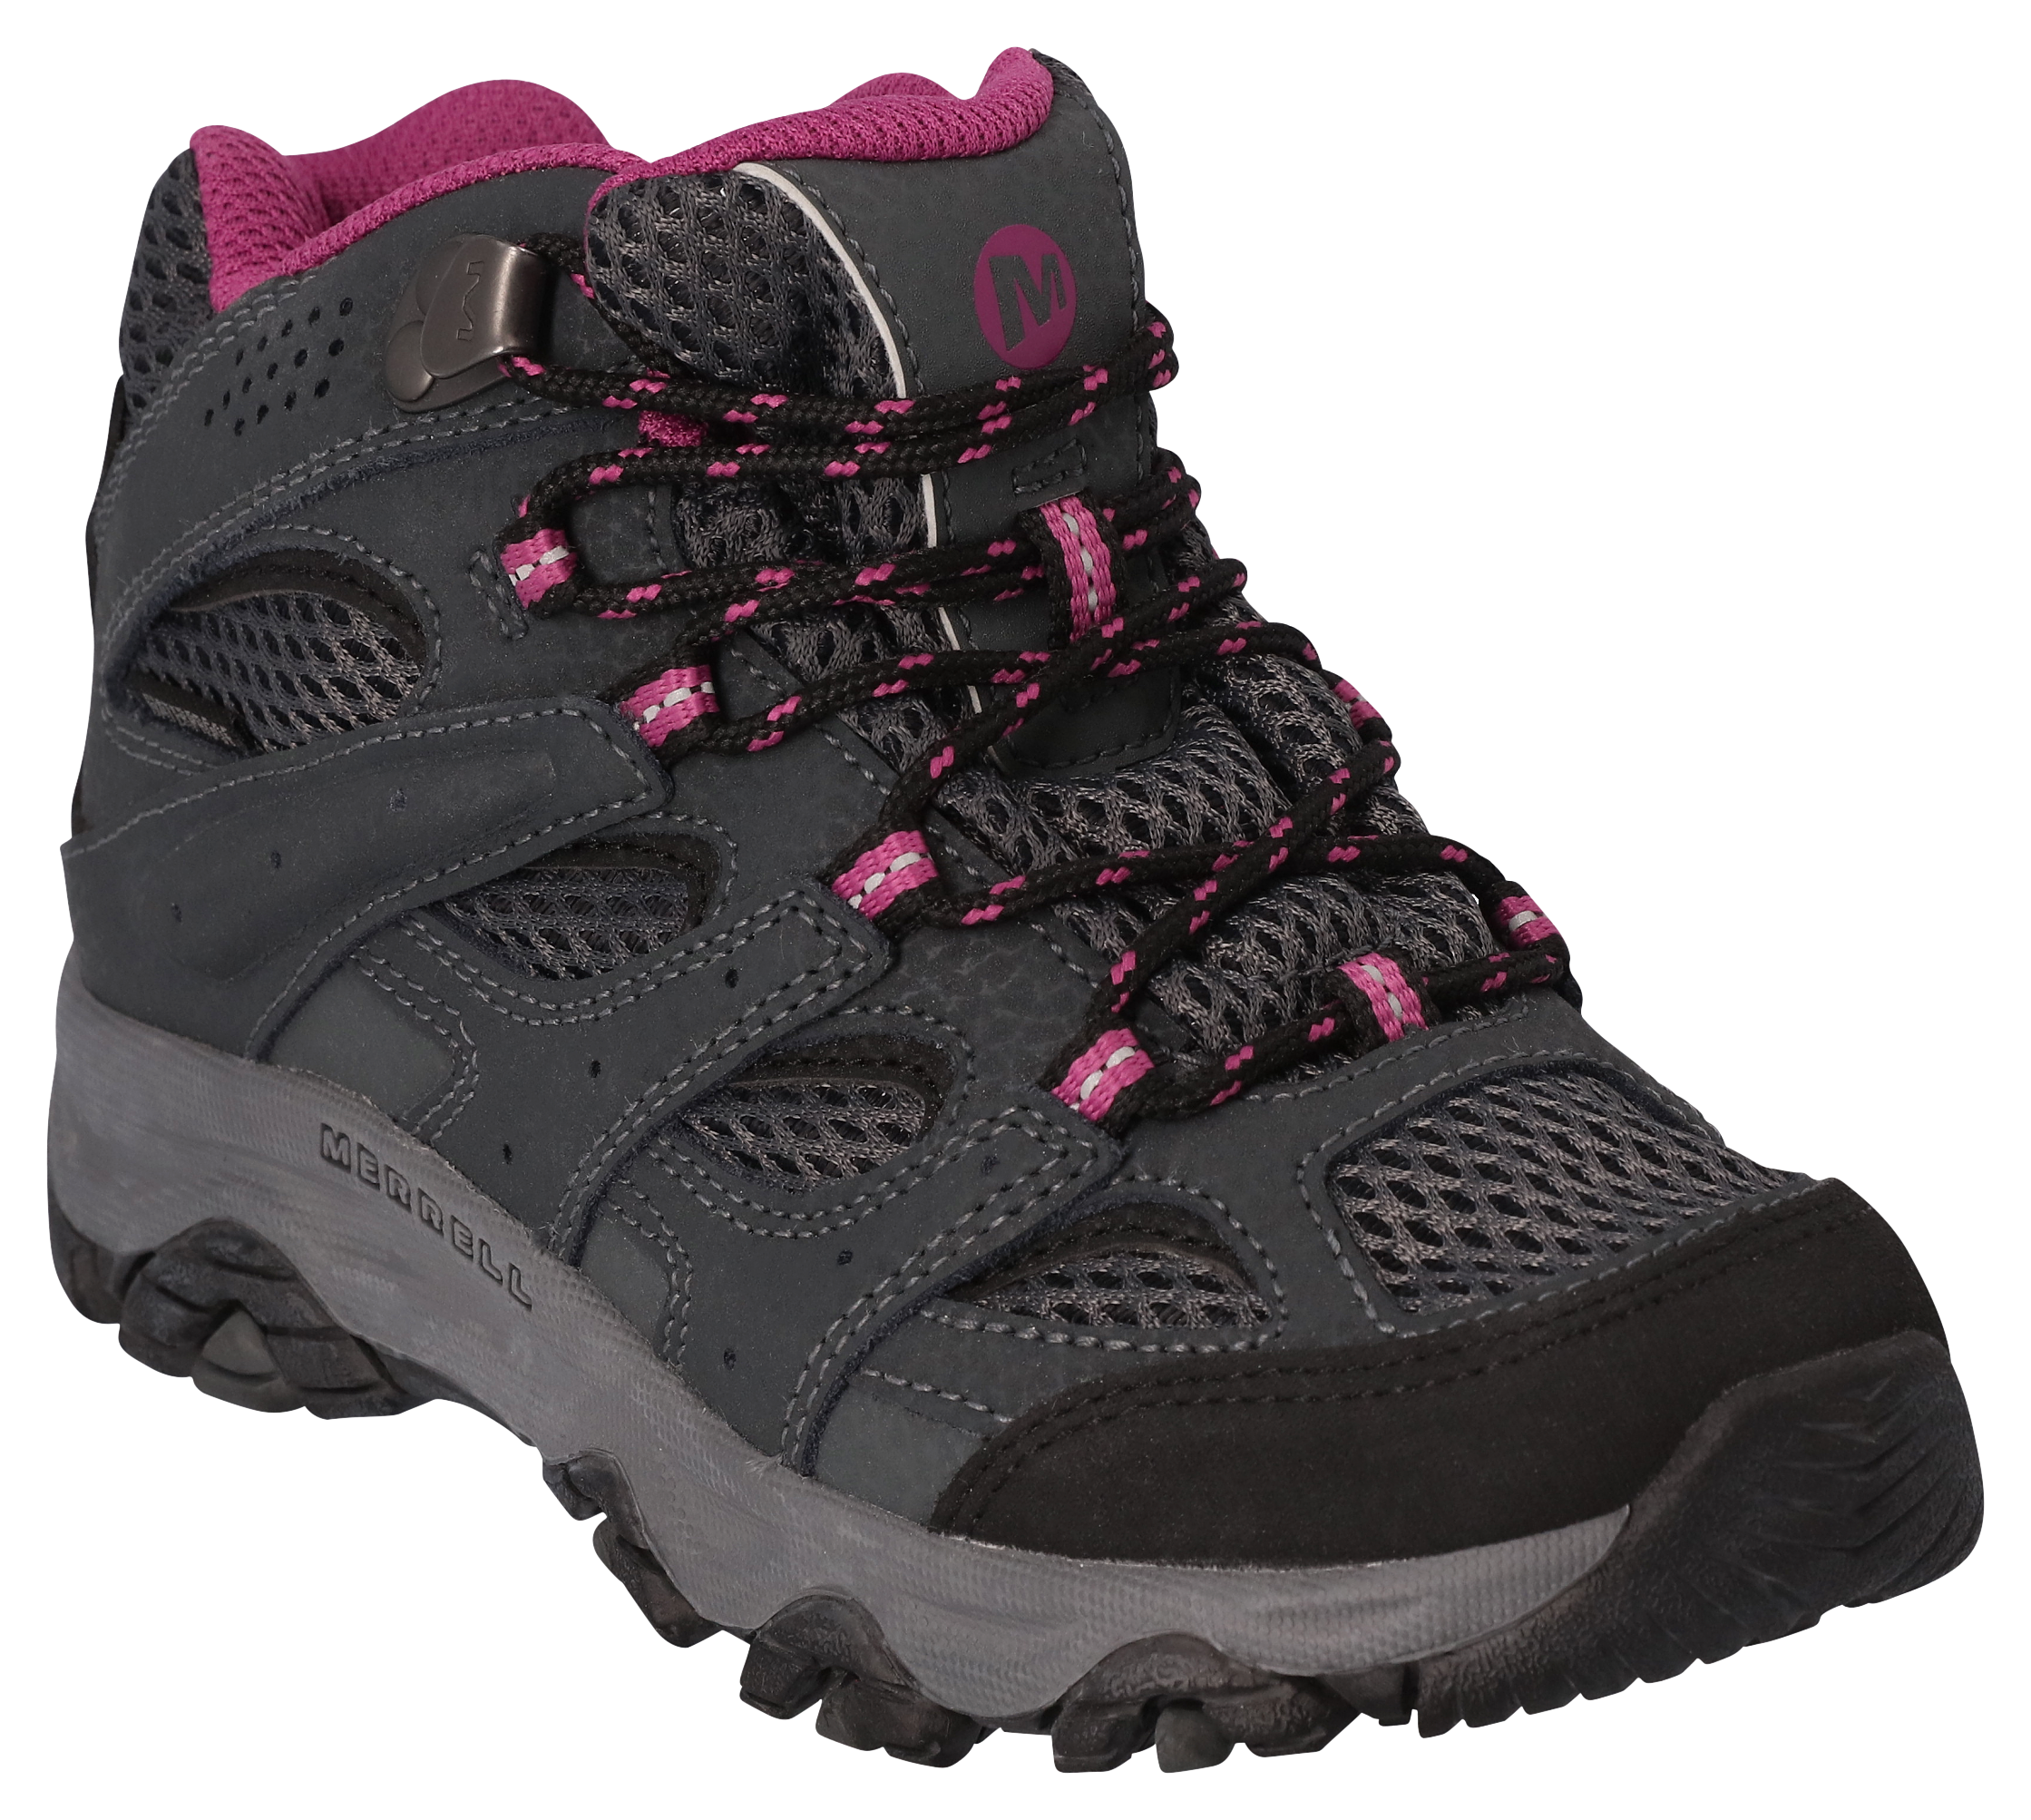 Merrell Moab III Mid Waterproof Hiking Boots for Kids - Granite - 5 Kids